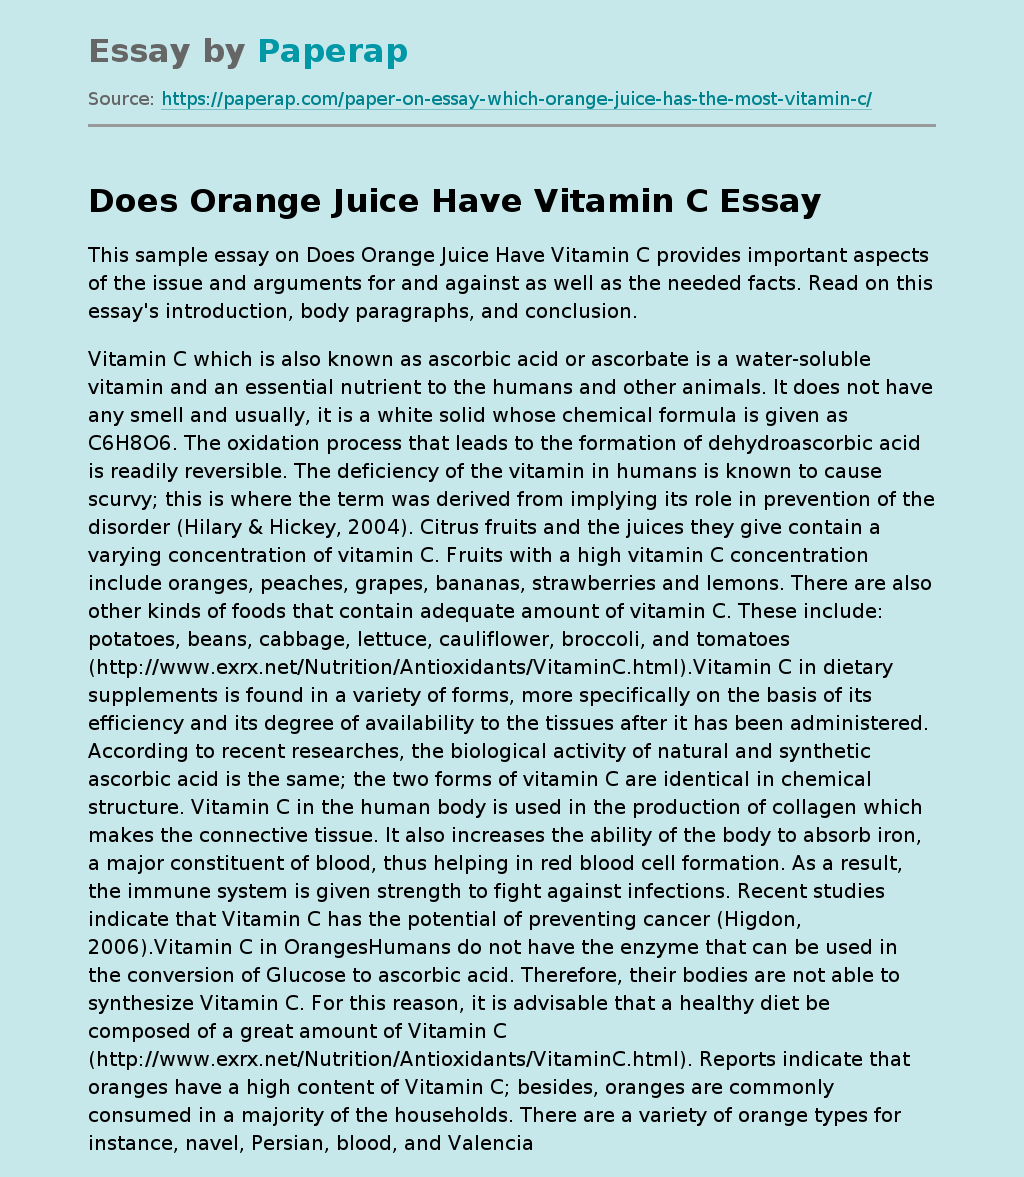 Does Orange Juice Have Vitamin C